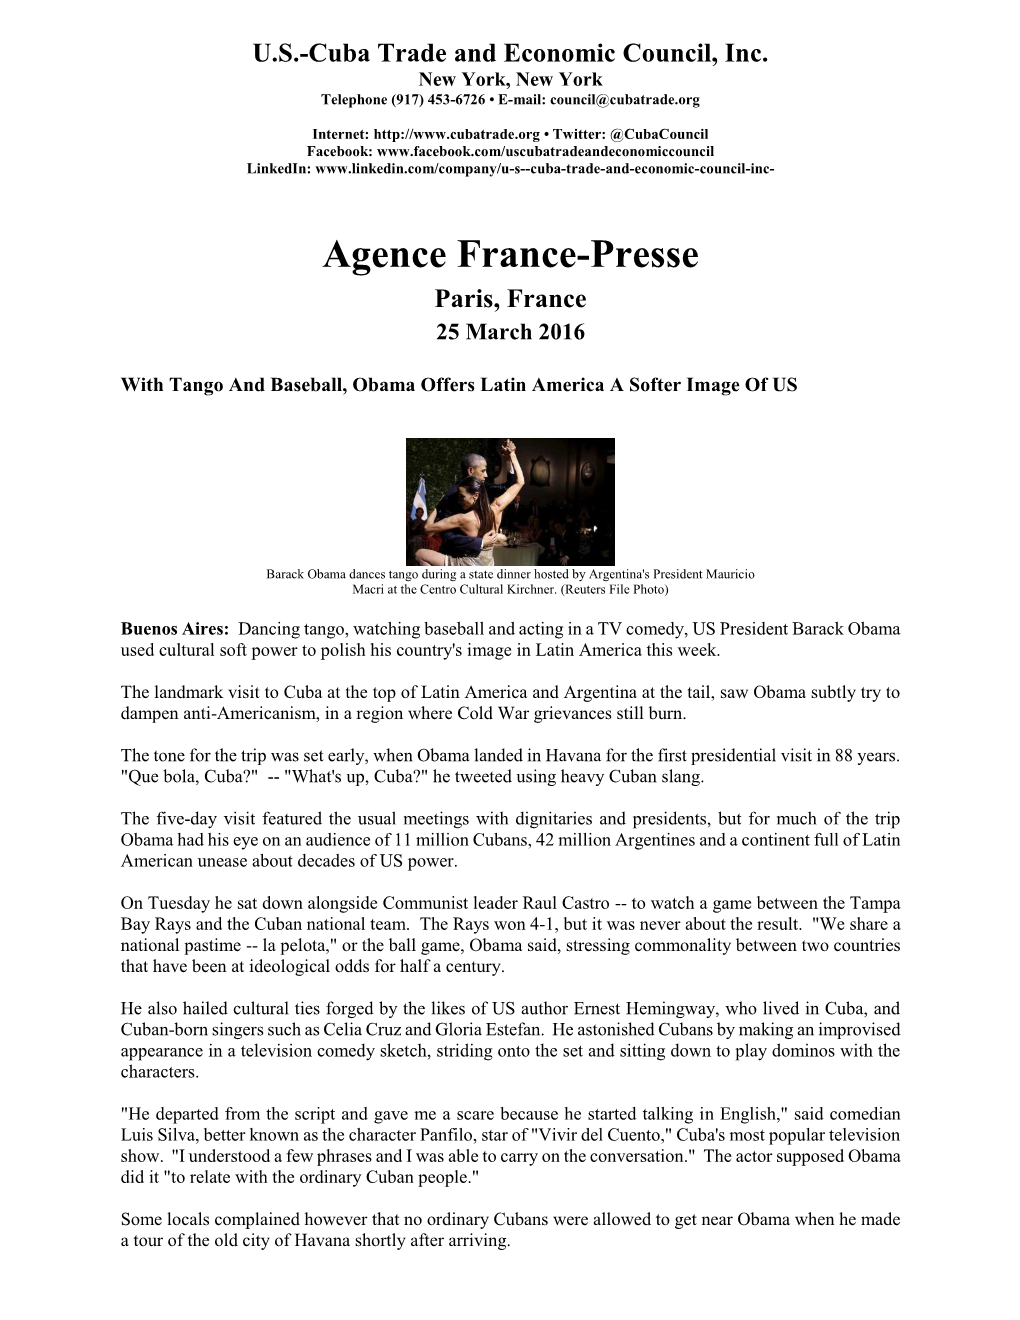 Agence France-Presse Paris, France 25 March 2016